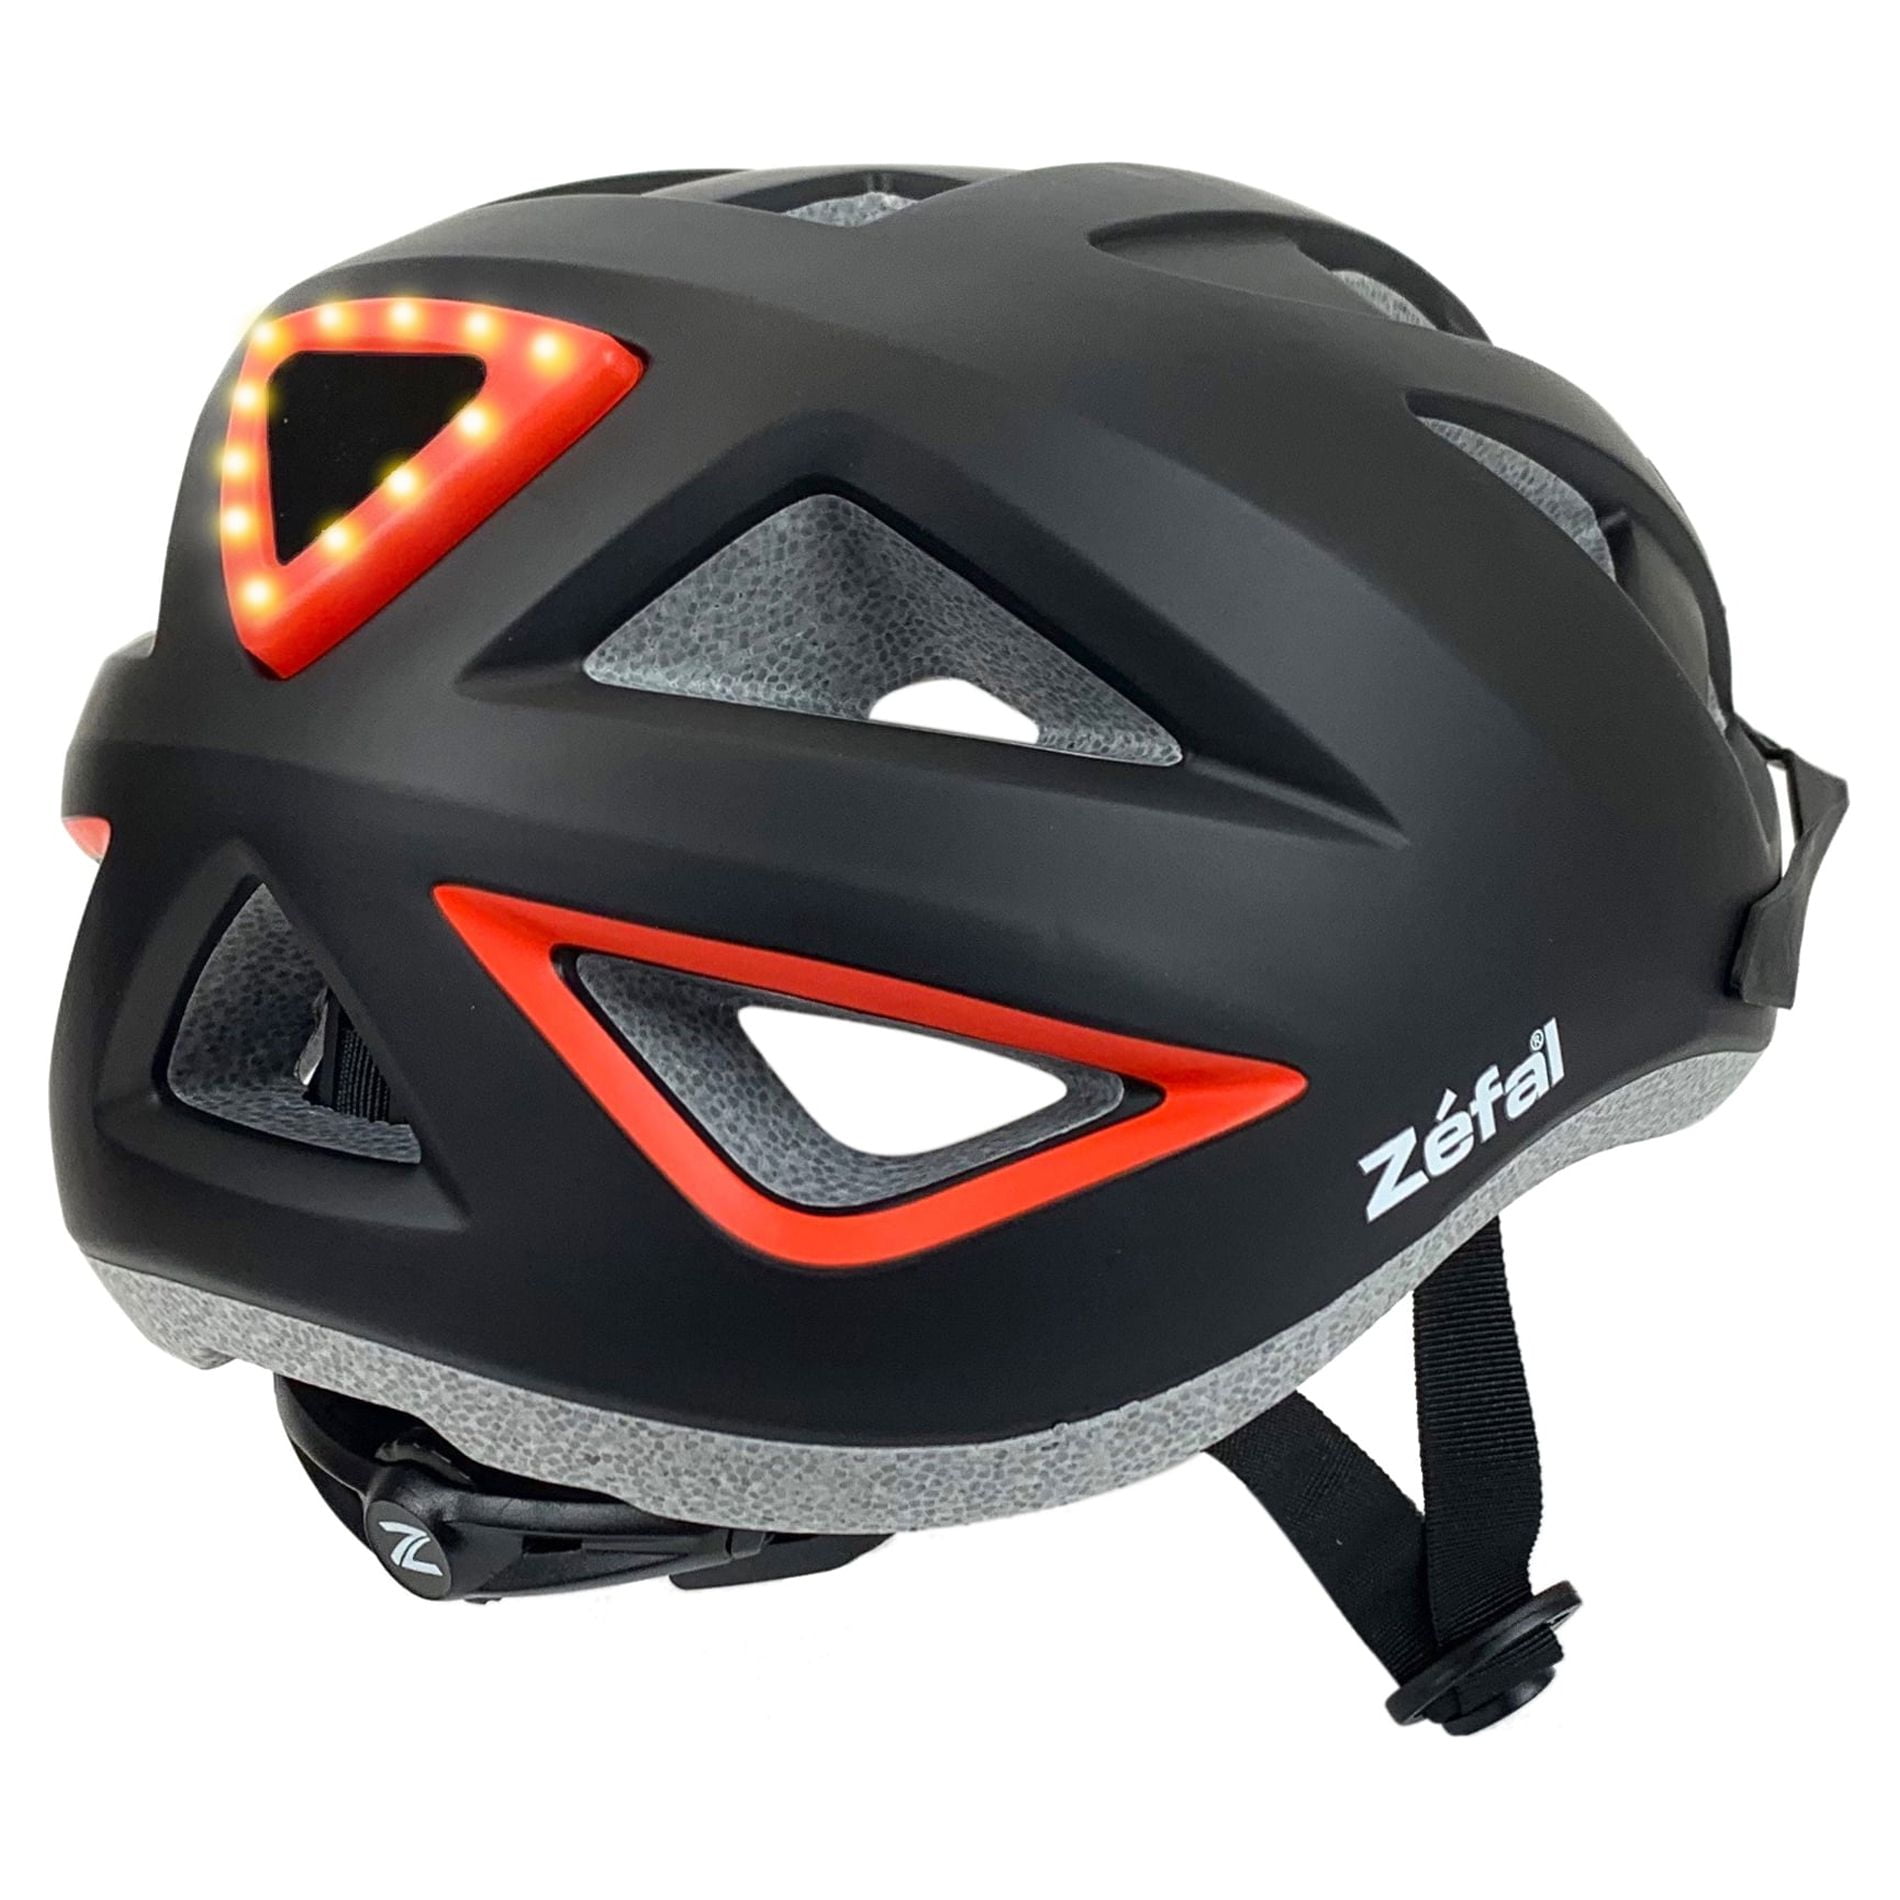 Zenroll Adult Bike Helmet Bicycle Helmets for Men Women Cycling with  Detachable Visor Stylish Lightweight